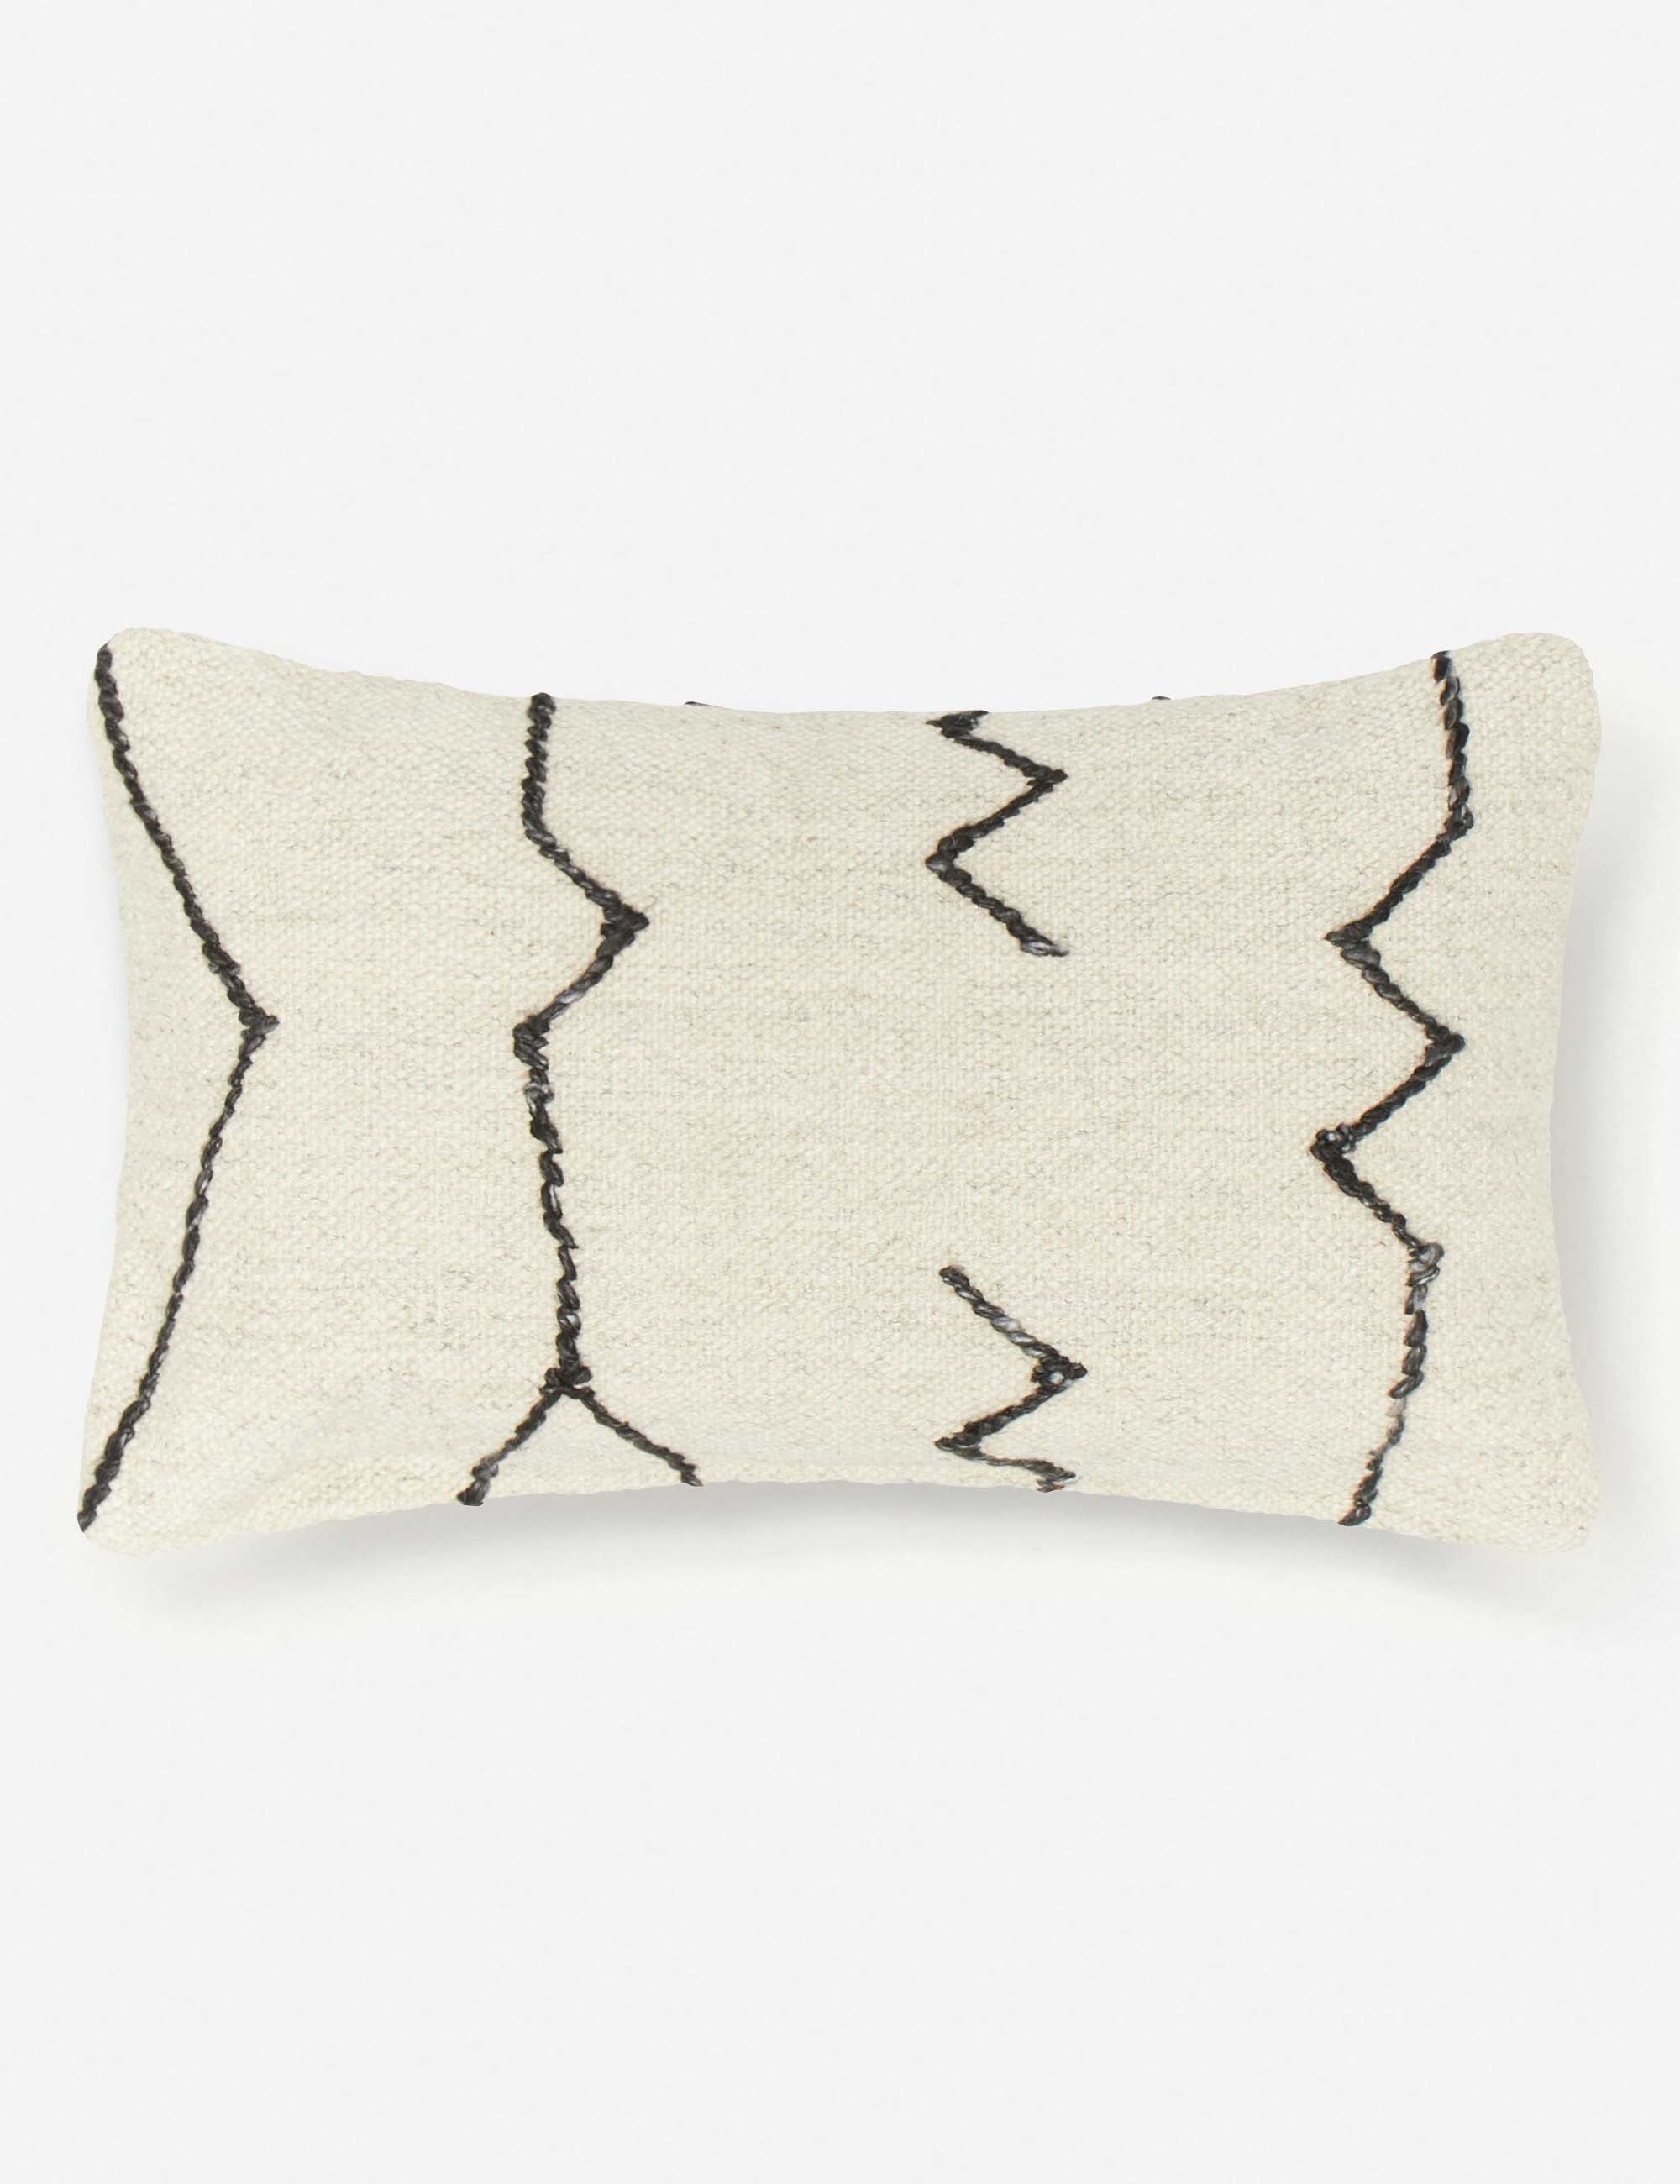 Moroccan Flatweave Pillow By Sarah Sherman Samuel - Black and Natural / 12" x 20" - Image 0